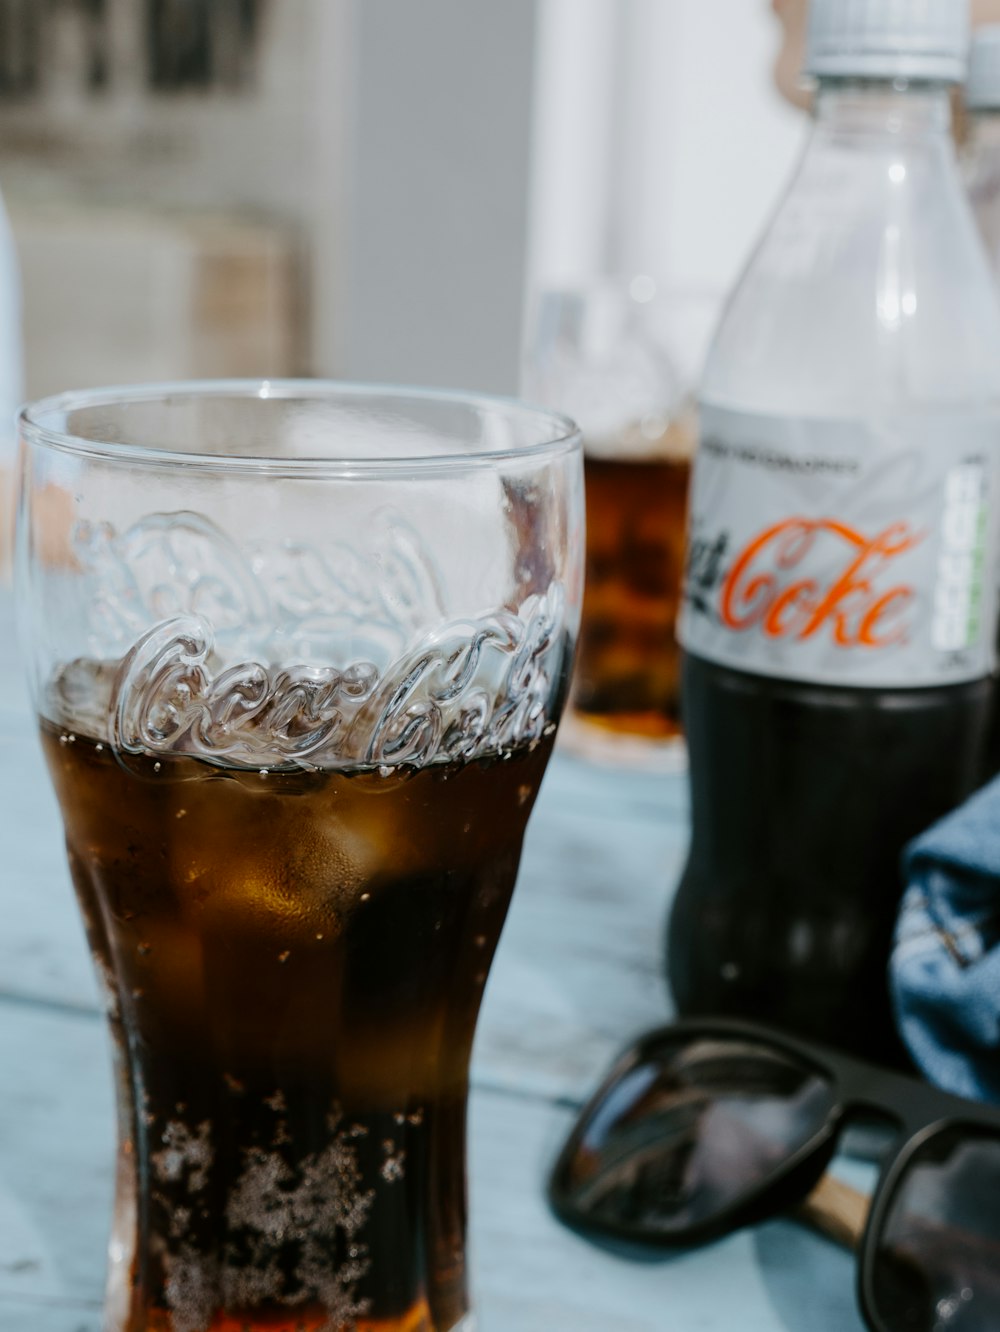 coca cola light bottle beside clear drinking glass